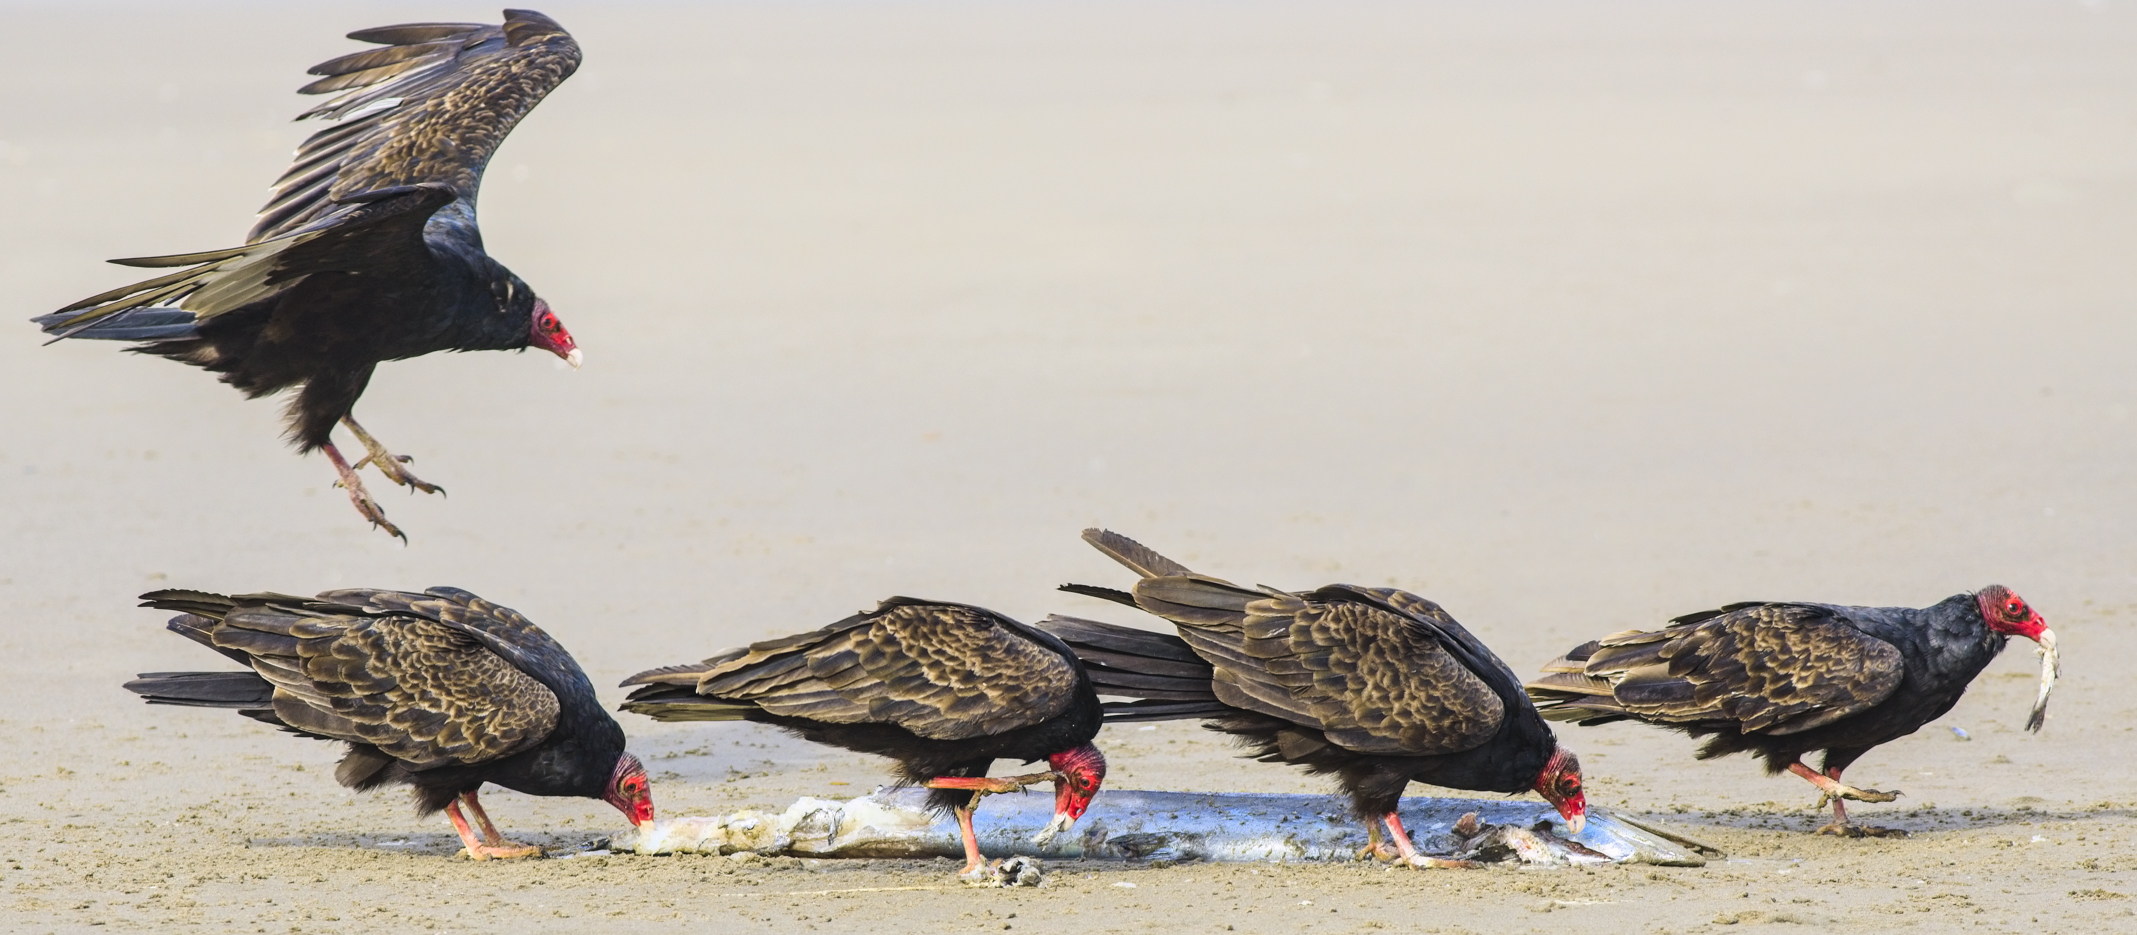 5 Vultures share a Lancet fish